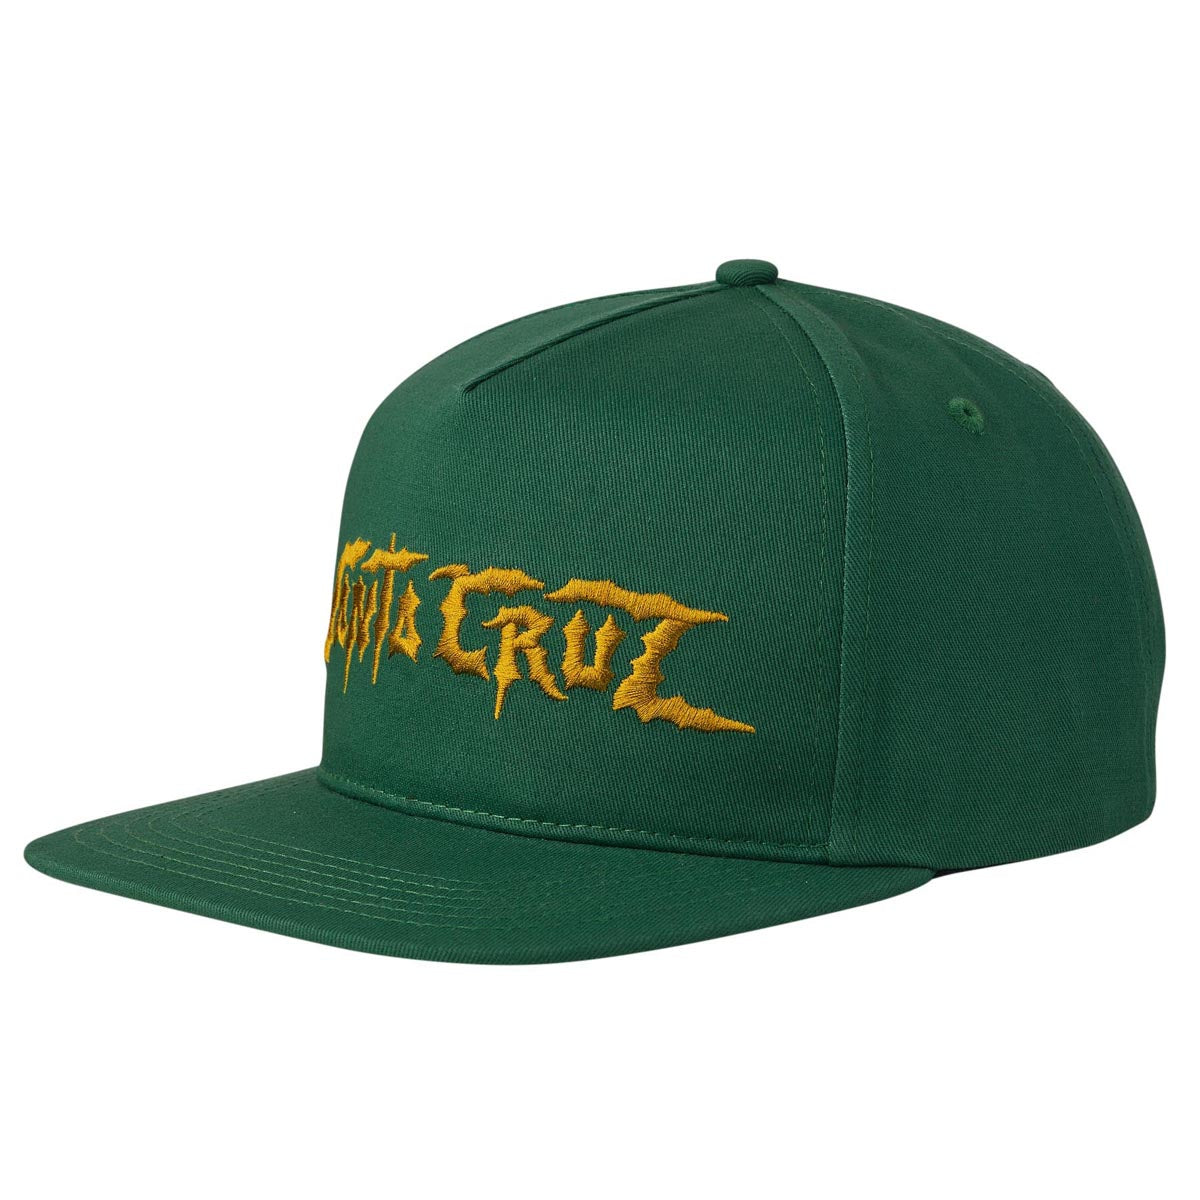 Santa Cruz Dungeon Strip Snapback Hat - Dark Green image 1